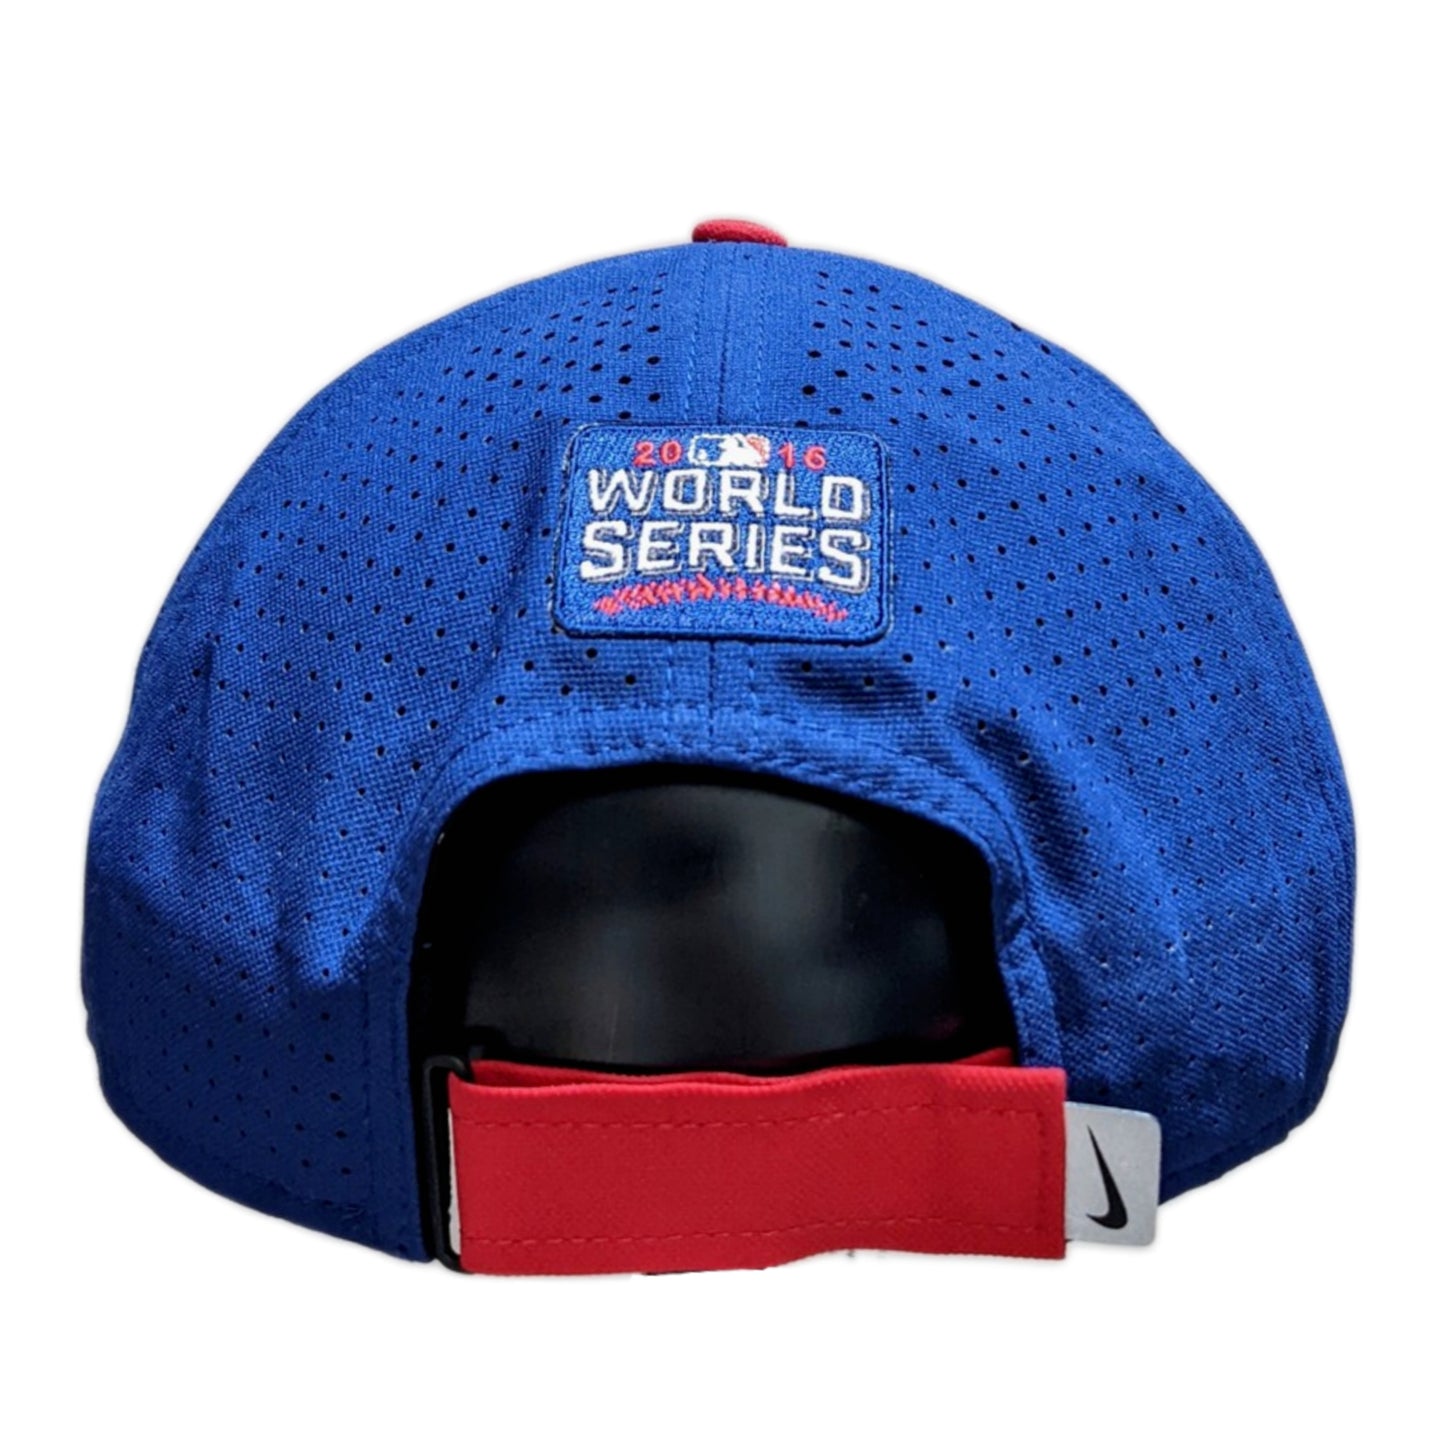 Men's Chicago Cubs Nike 2016 World Series Royal Aero True Adjustable Performance Hat